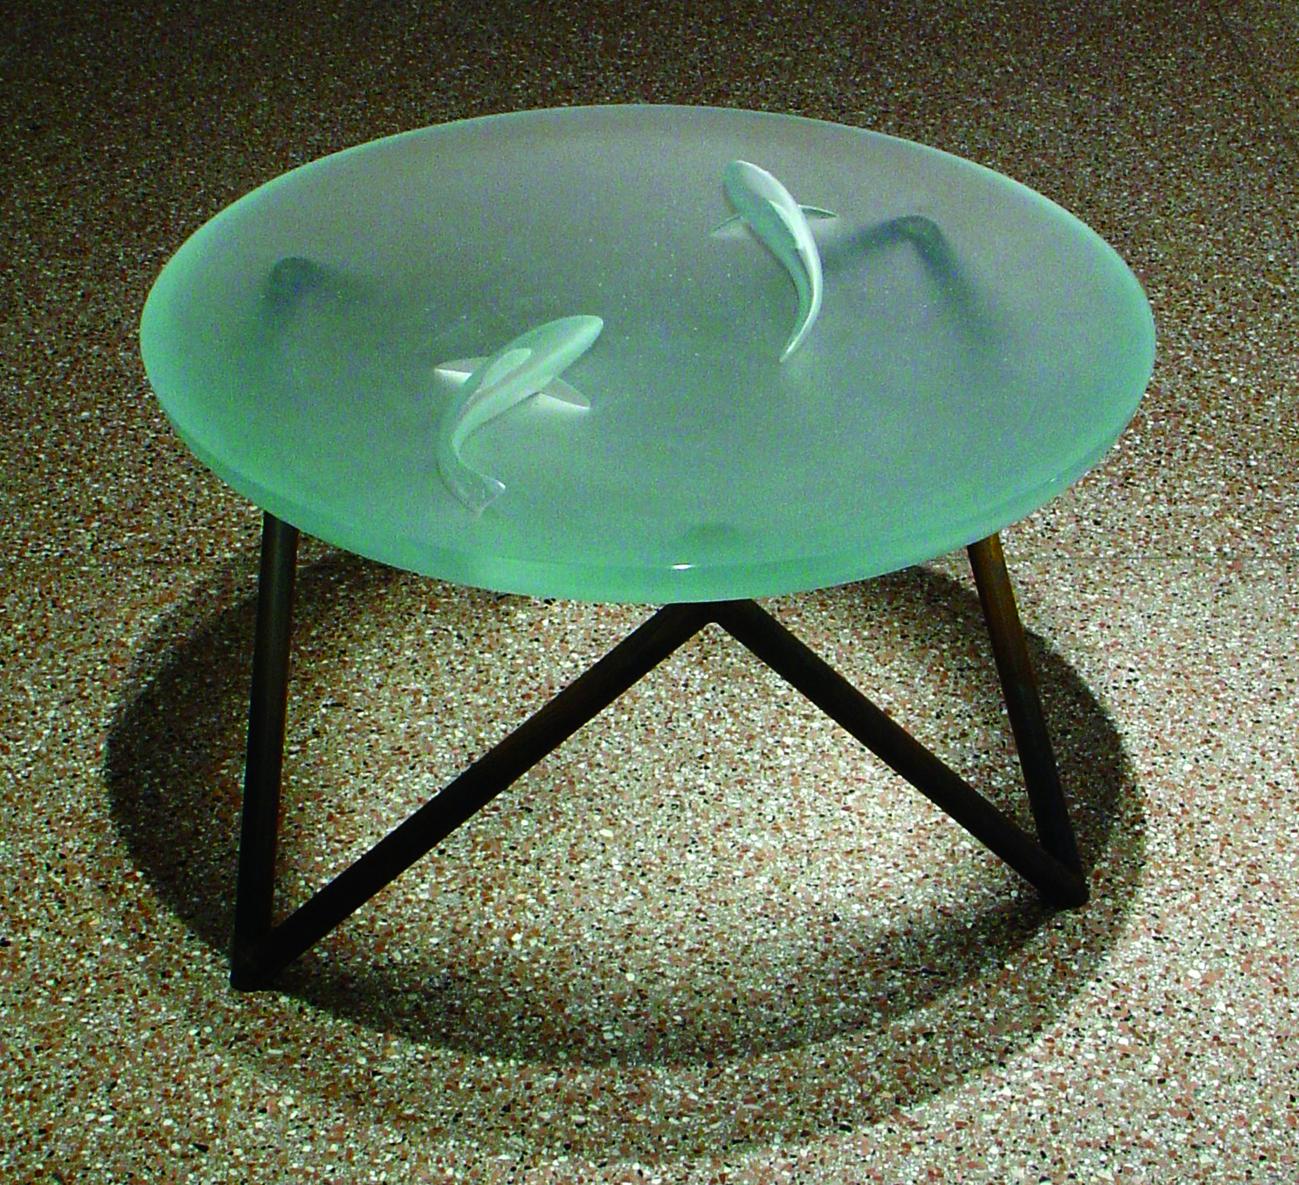 Fish table
Michal Gabriel, 1997
Cast glass, metal construction
Measures: 36 x 20 inches.